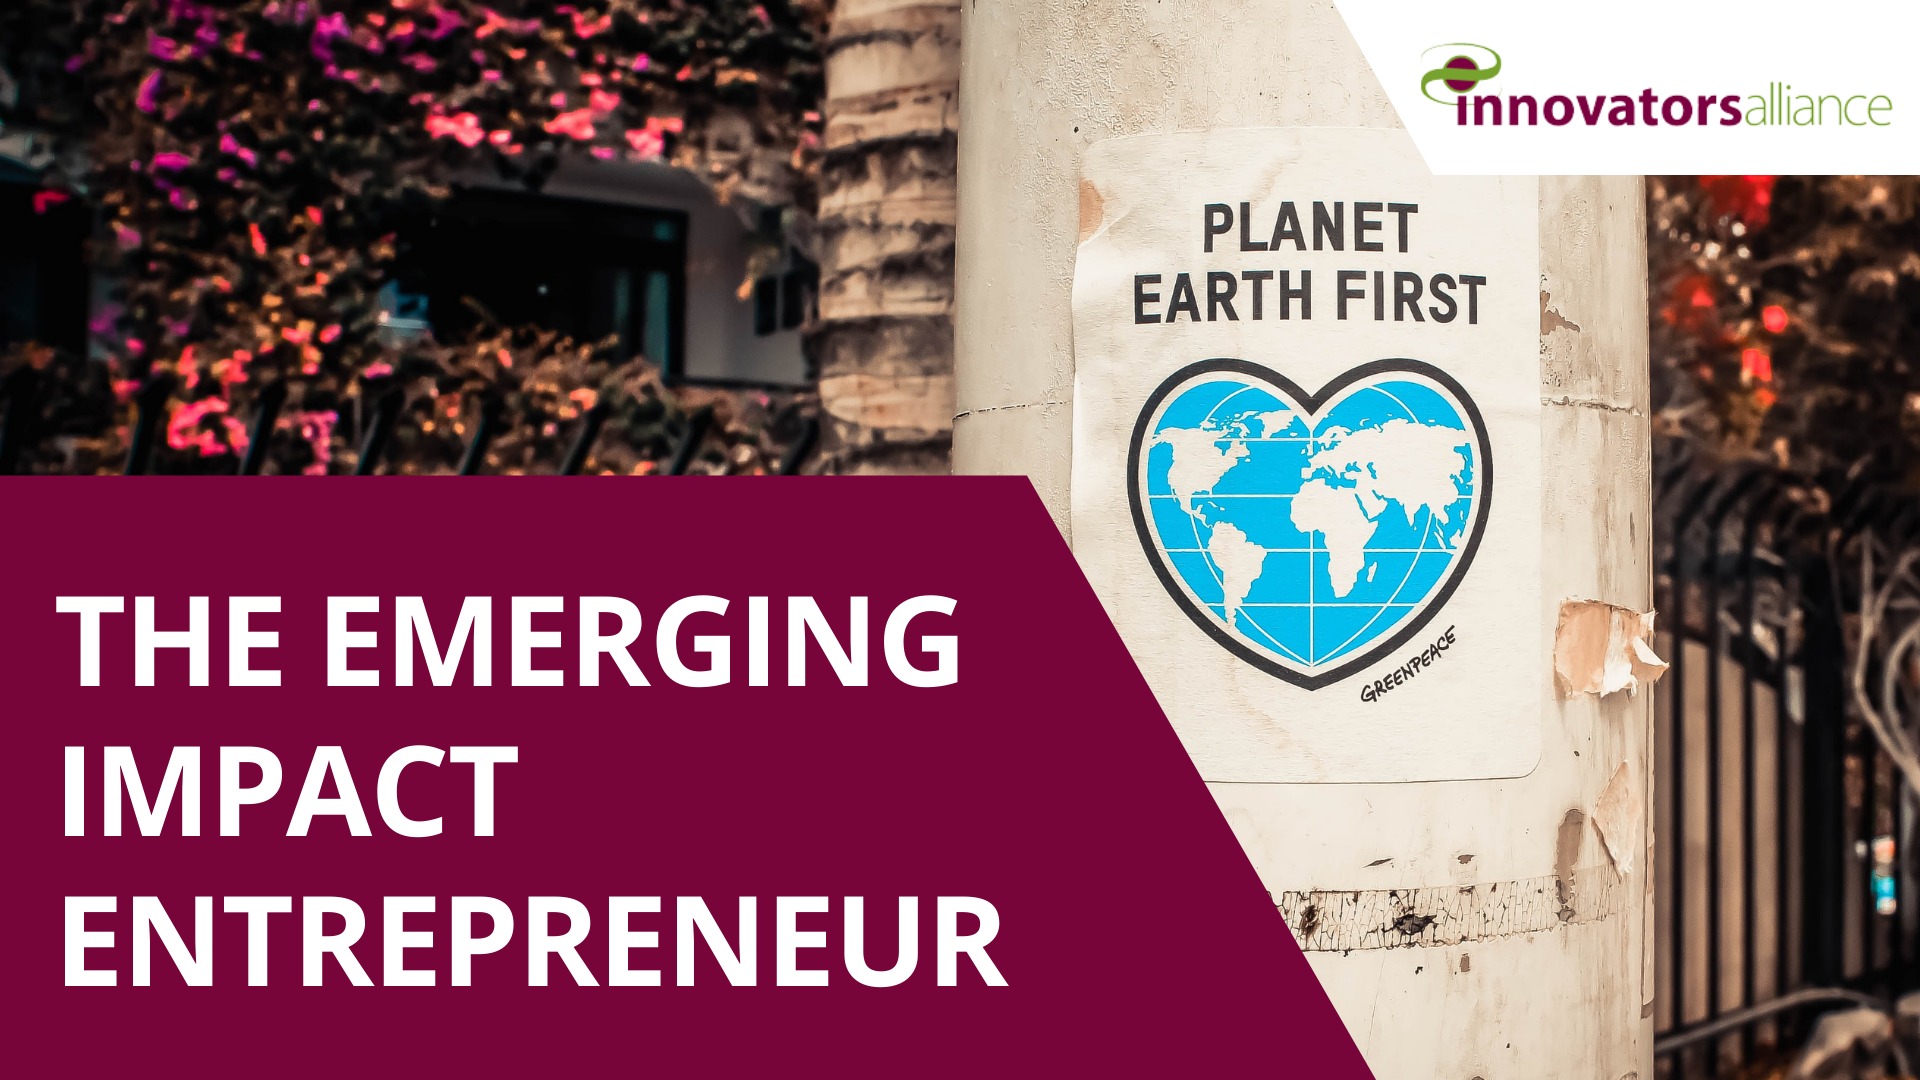 The emerging impact entrepreneur